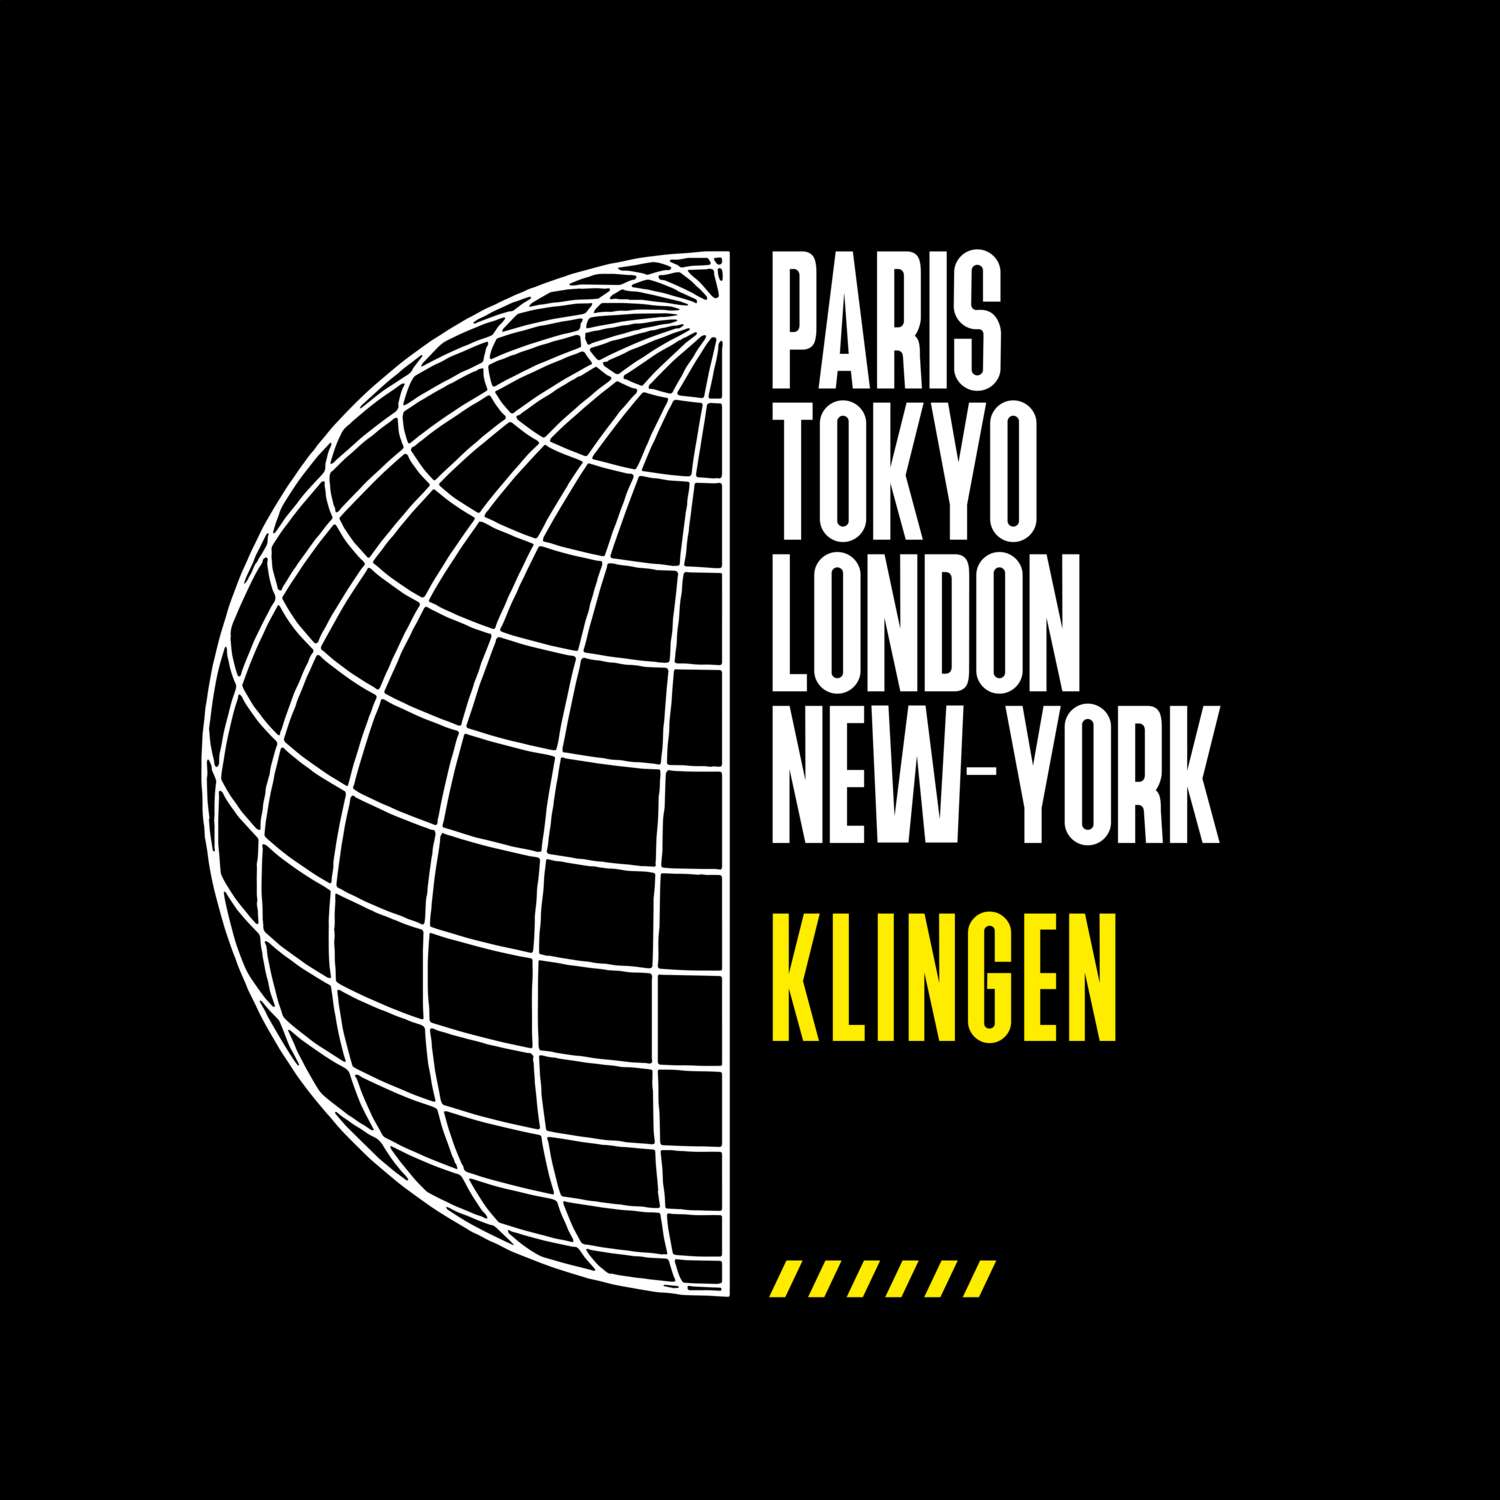 Klingen T-Shirt »Paris Tokyo London«